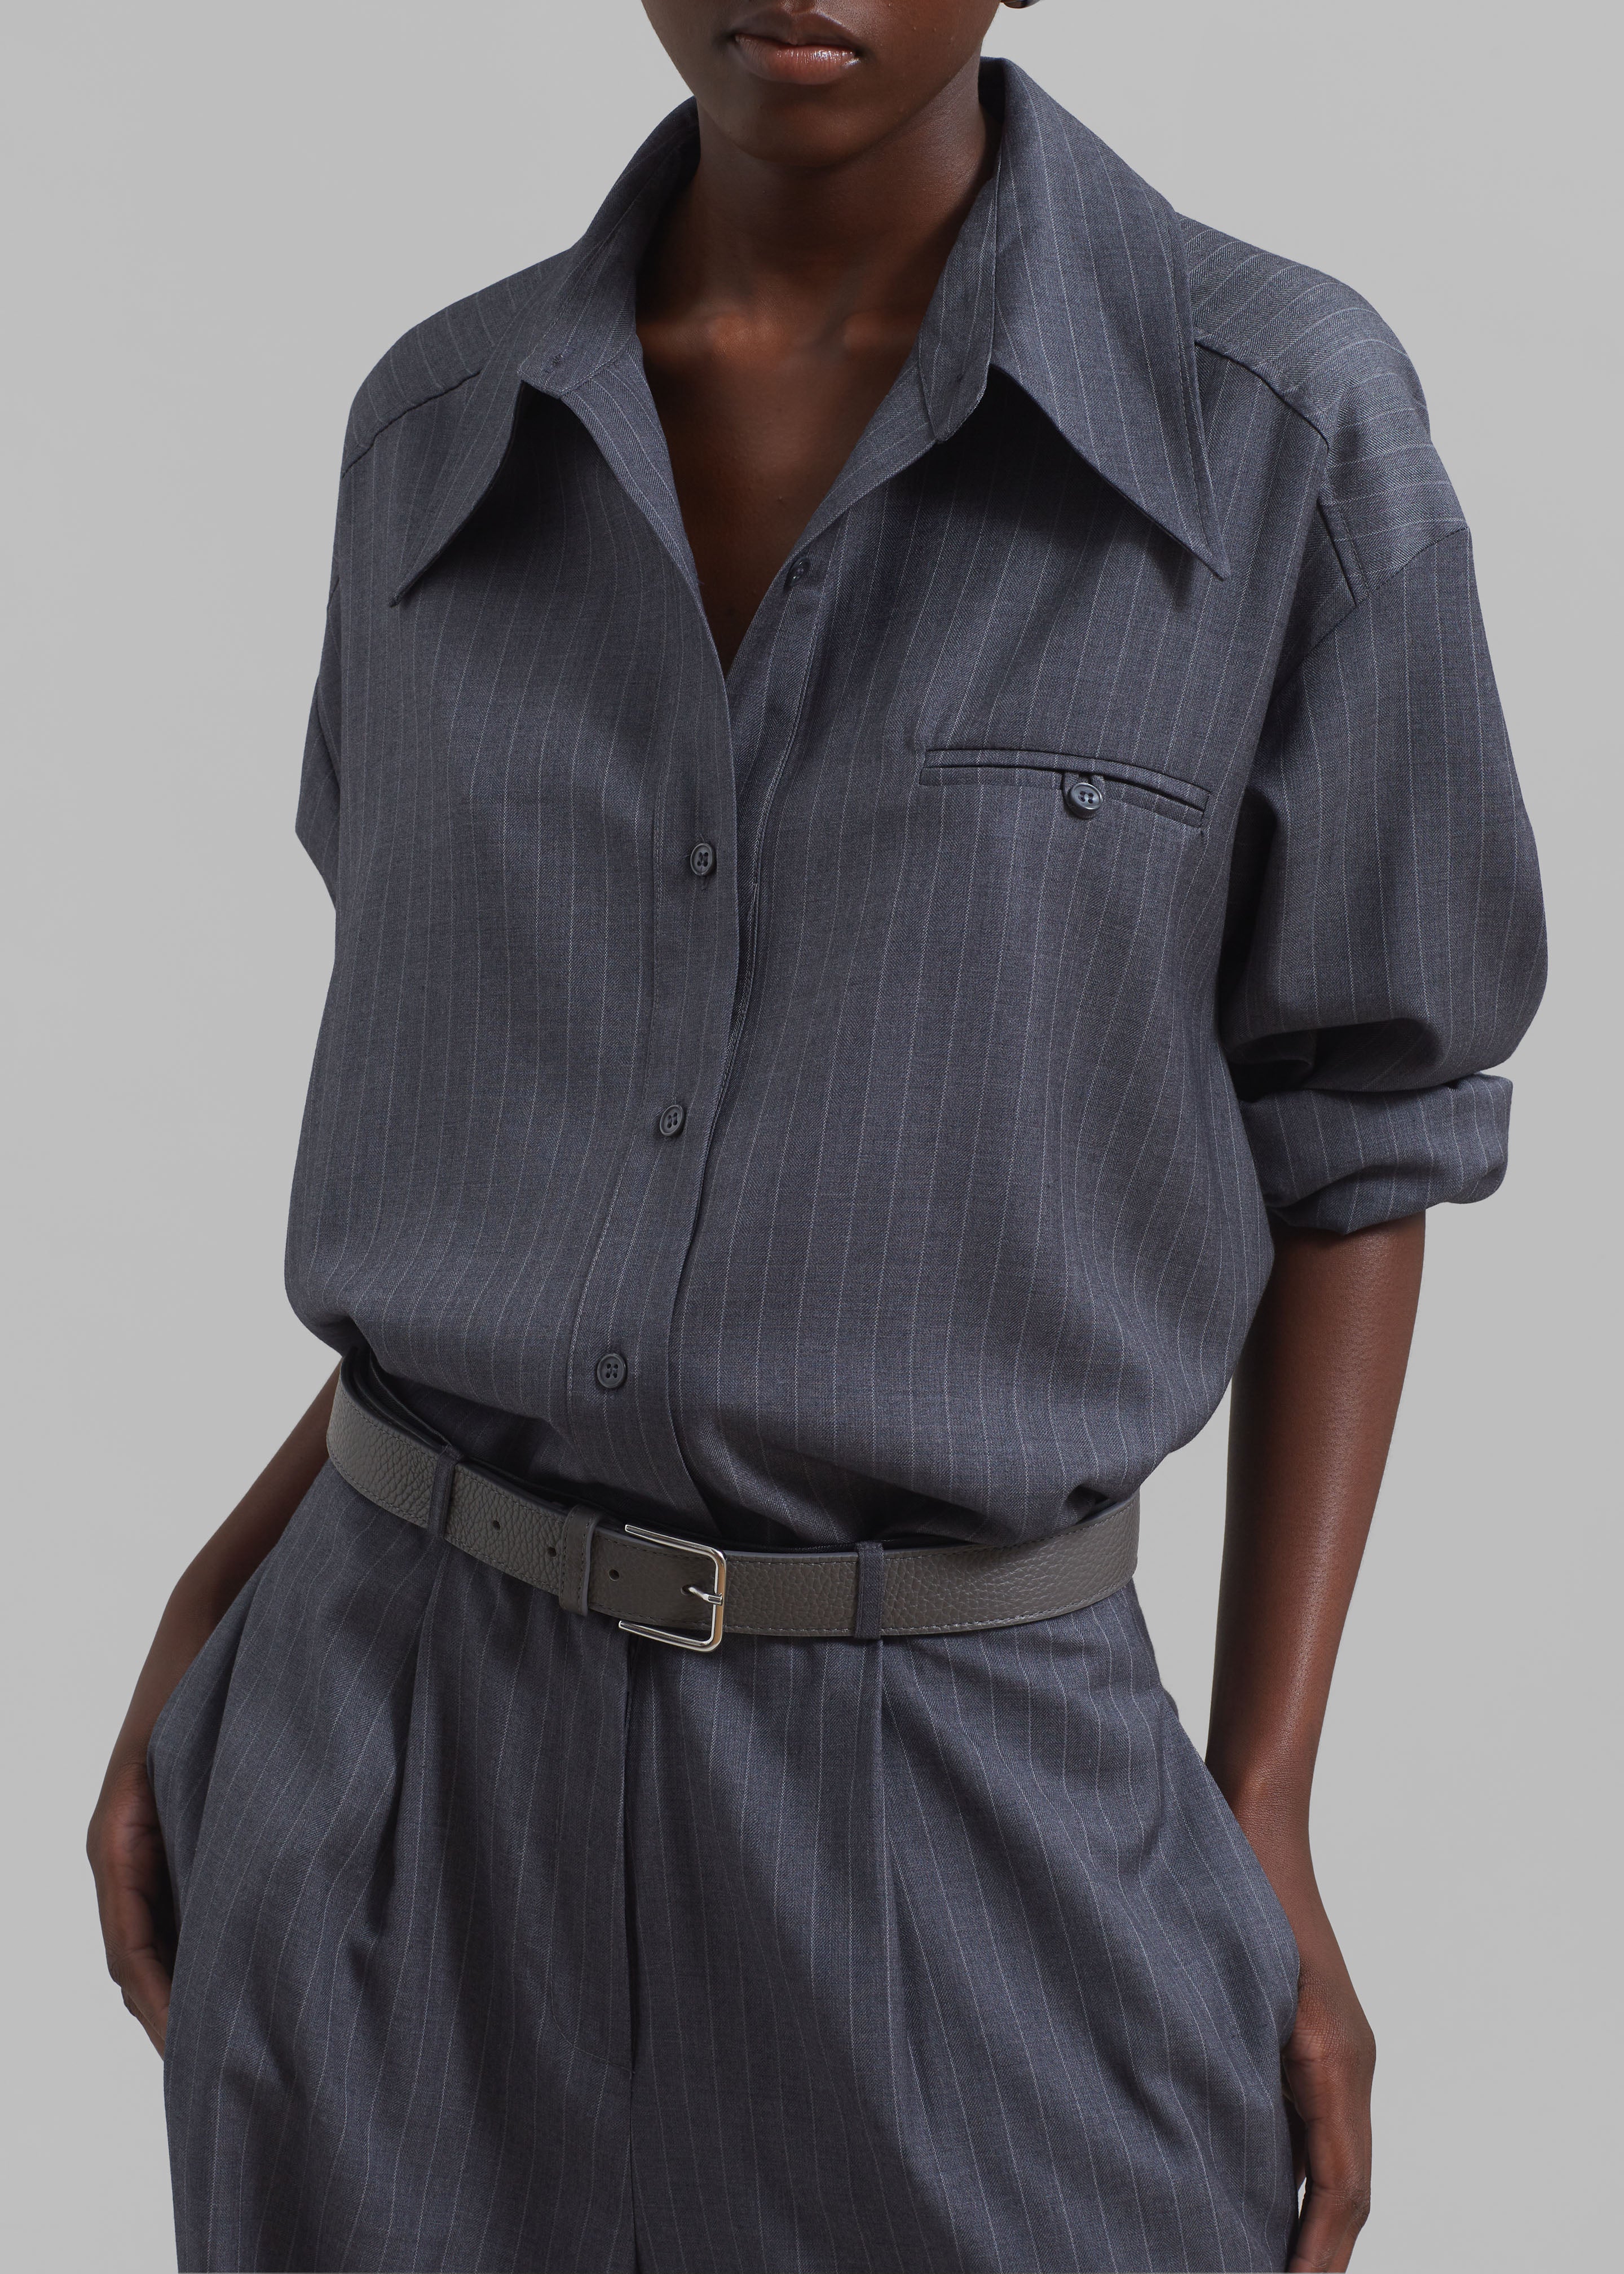 Kerry Button Up Shirt - Grey Pinstripe - 9